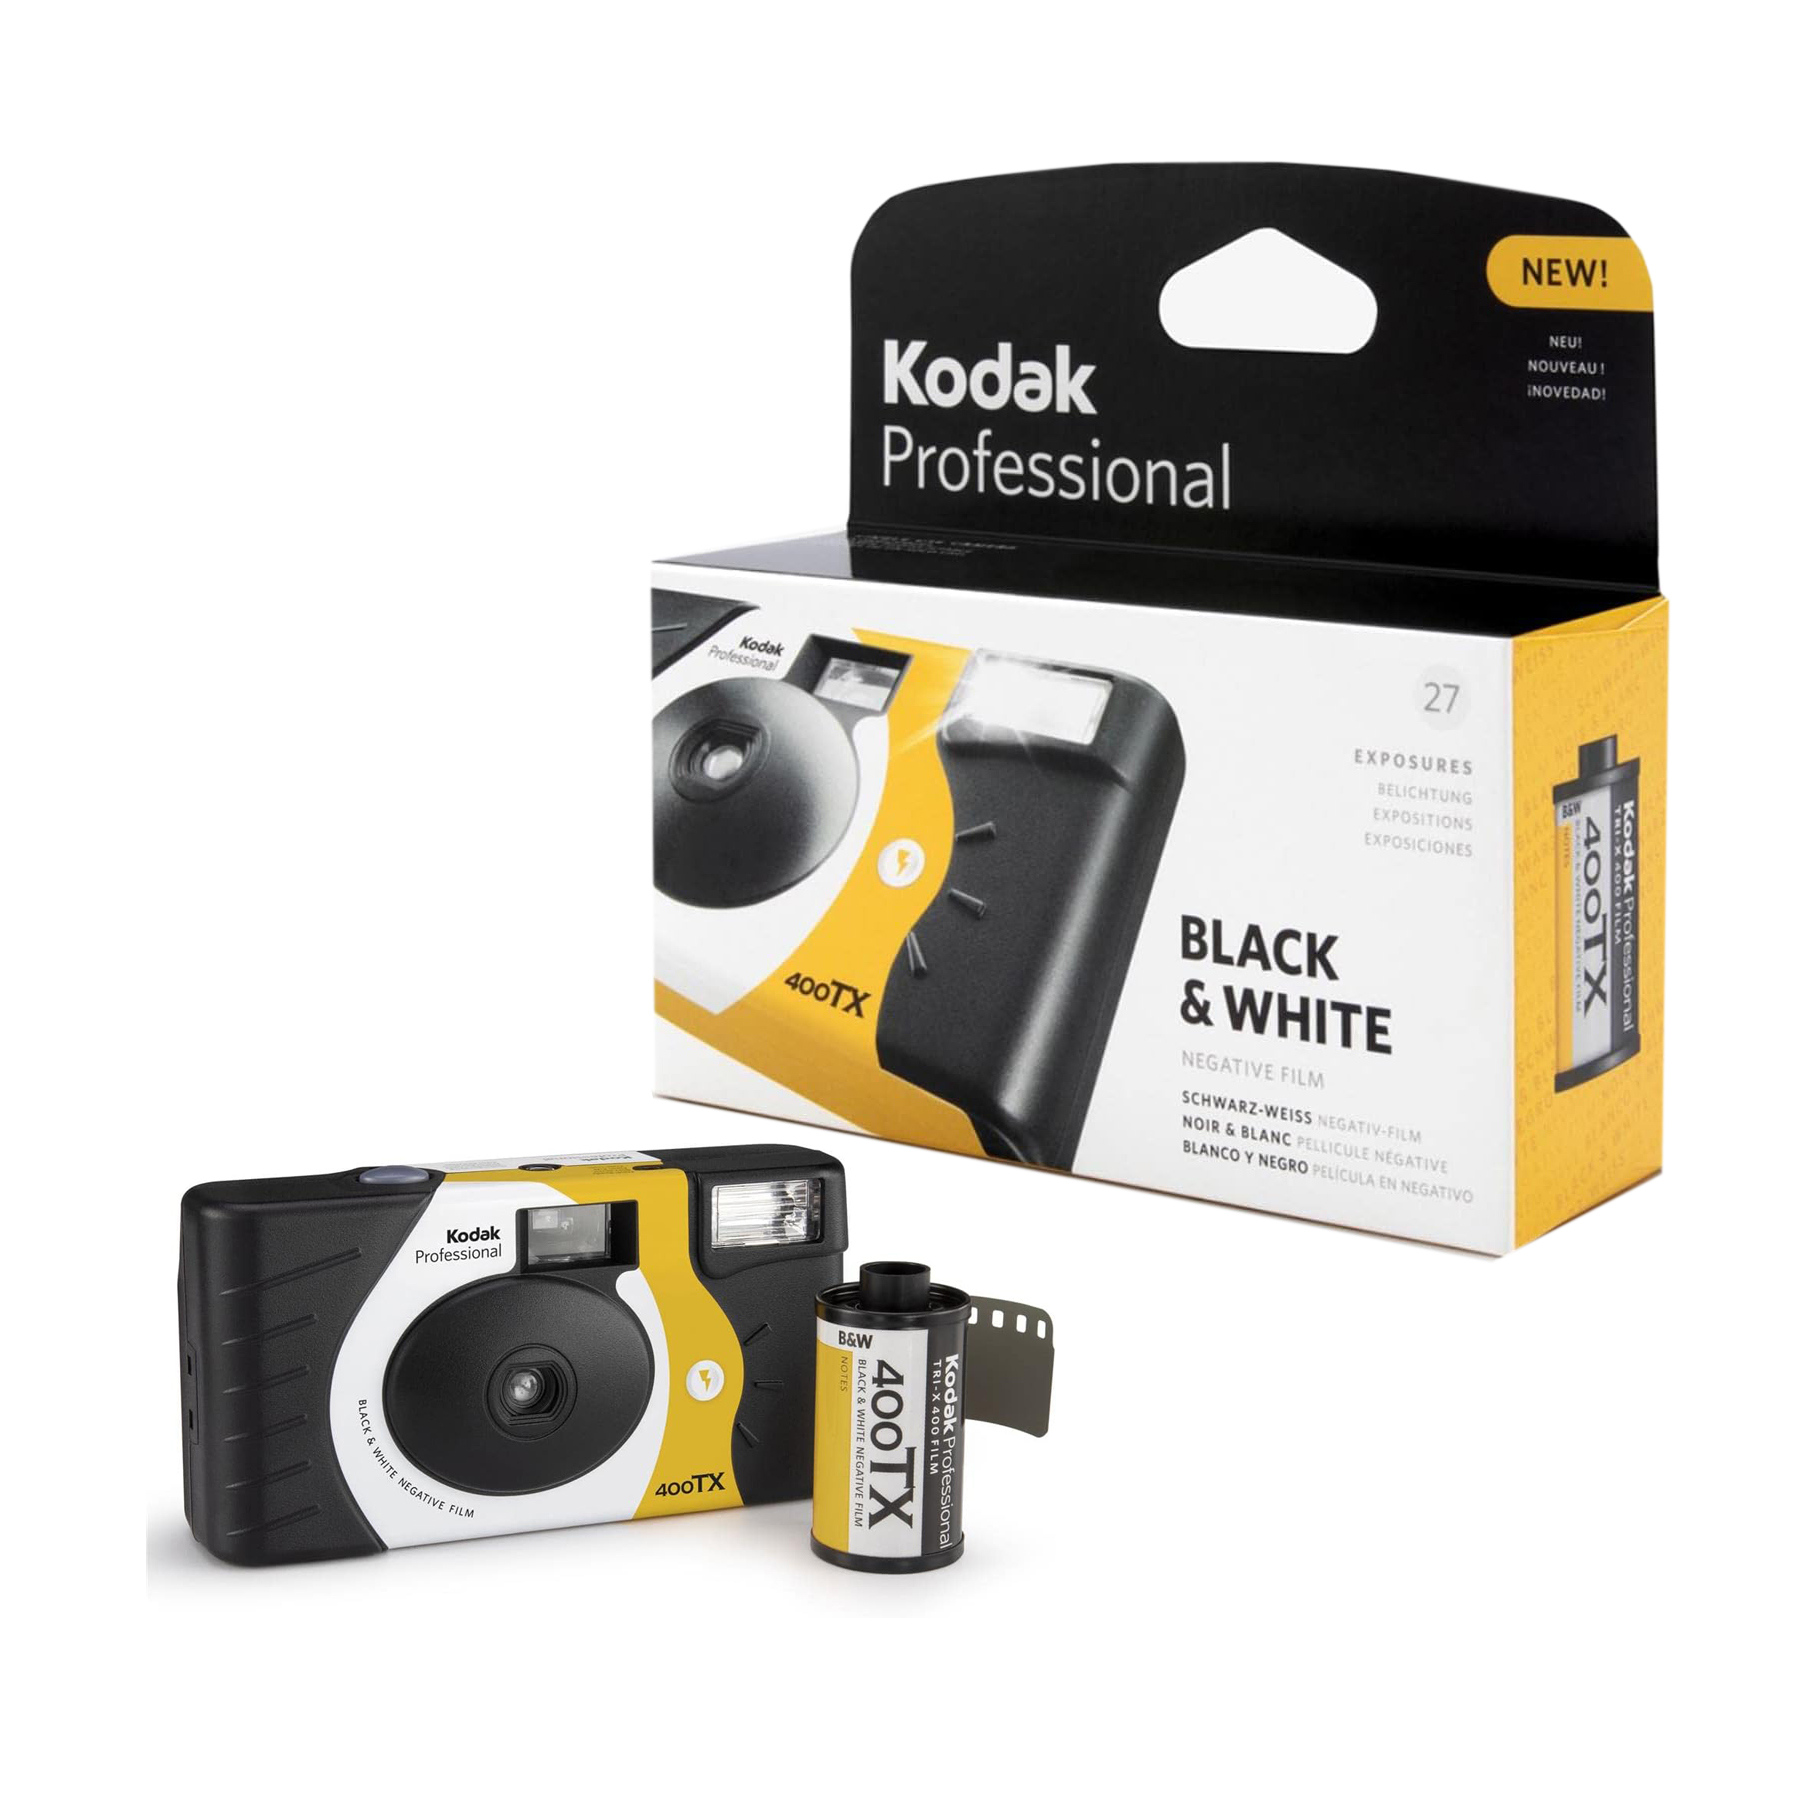 KODAK 1AAAA PROFESSIONAL TRI-X 400 BLACK AND WHITE NEGATIVE FILM SINGLE USE CAMERA ,27 EXPOSURES